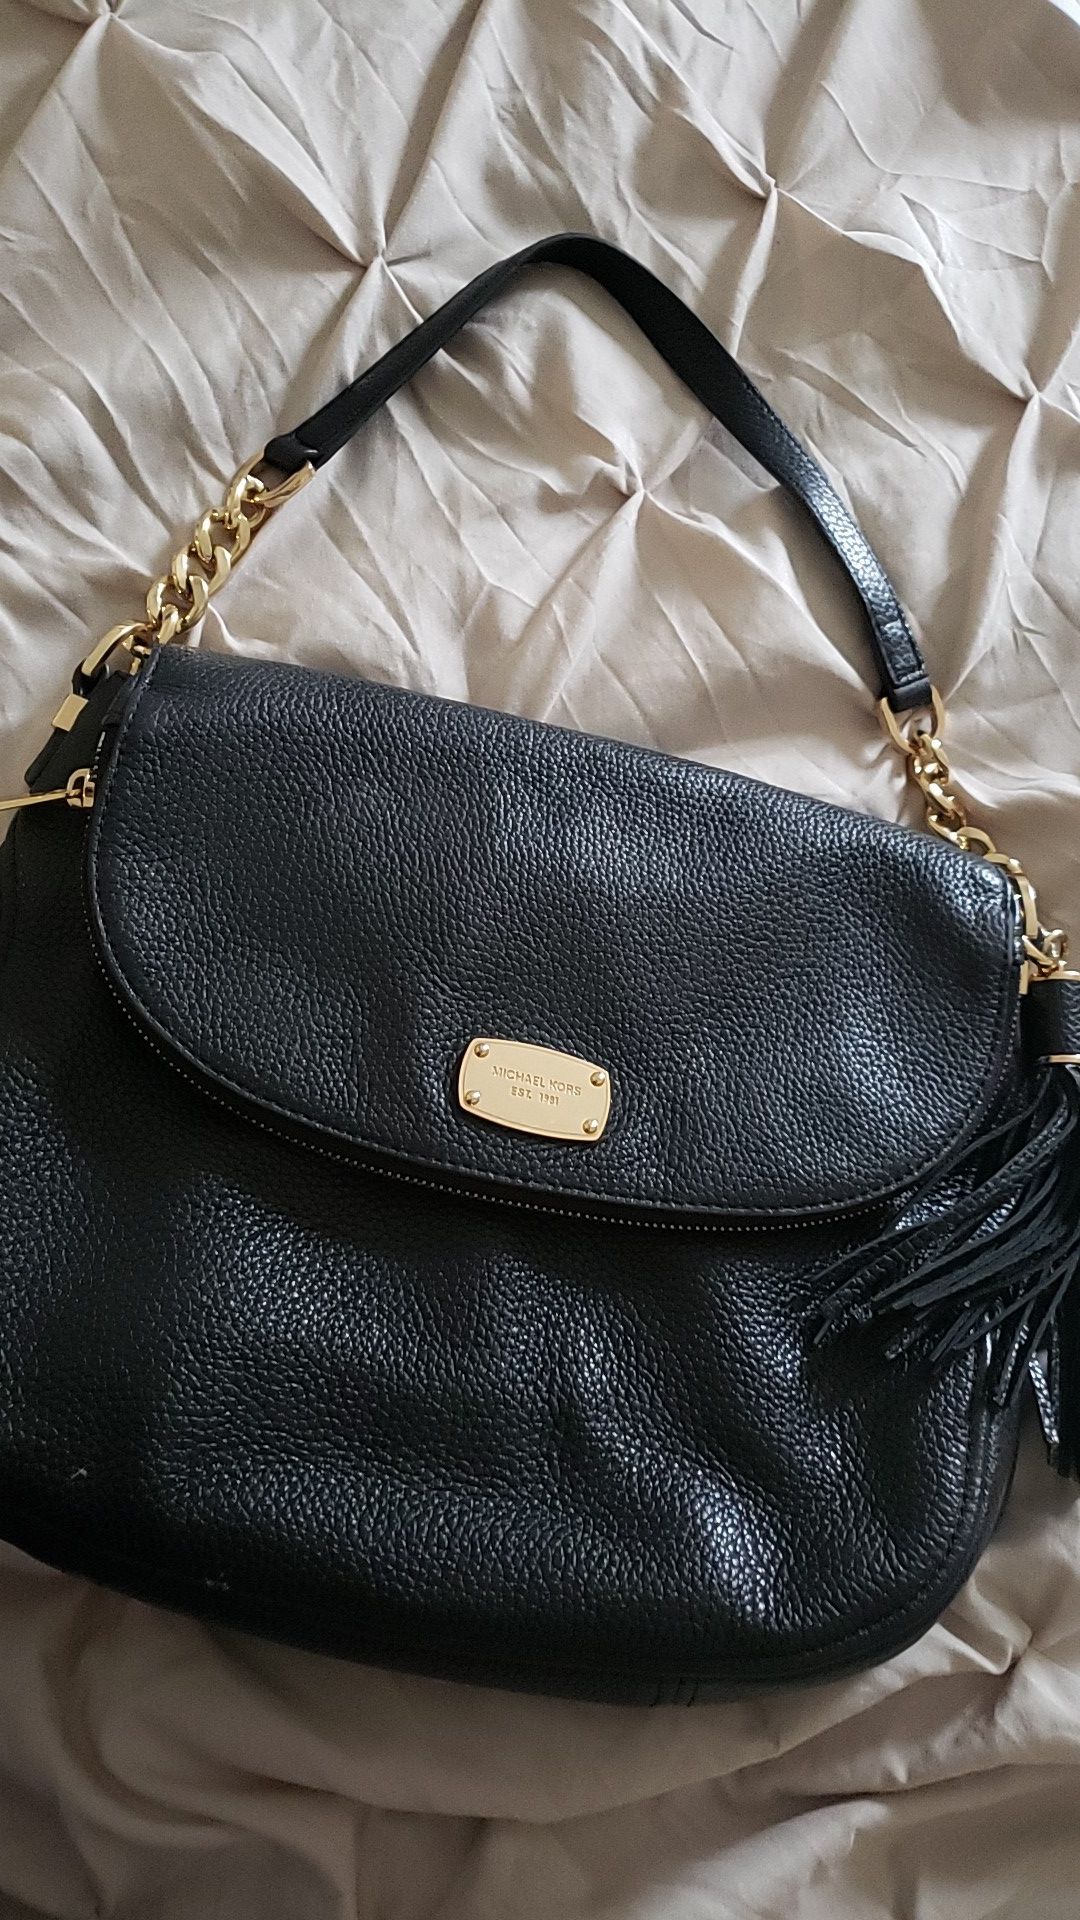 Mk authentic black leather bag